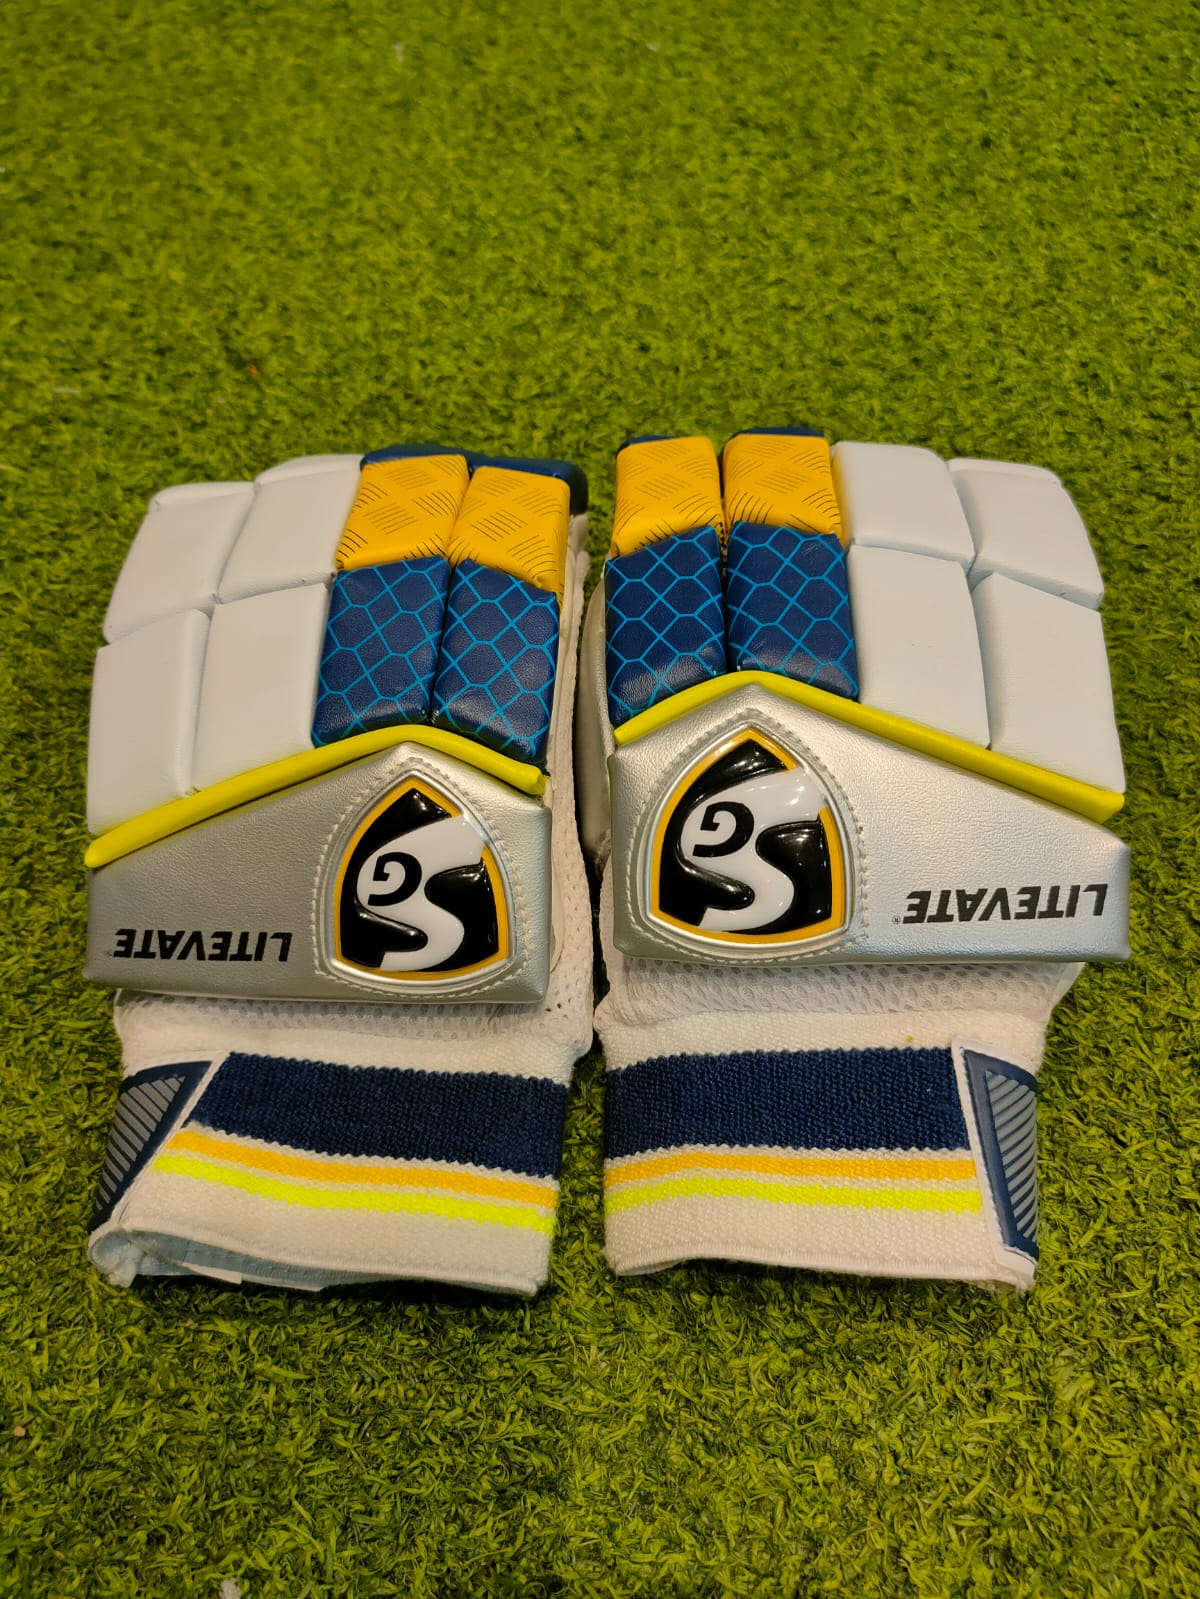 Cricket Batting Gloves -SG LITEVATE 